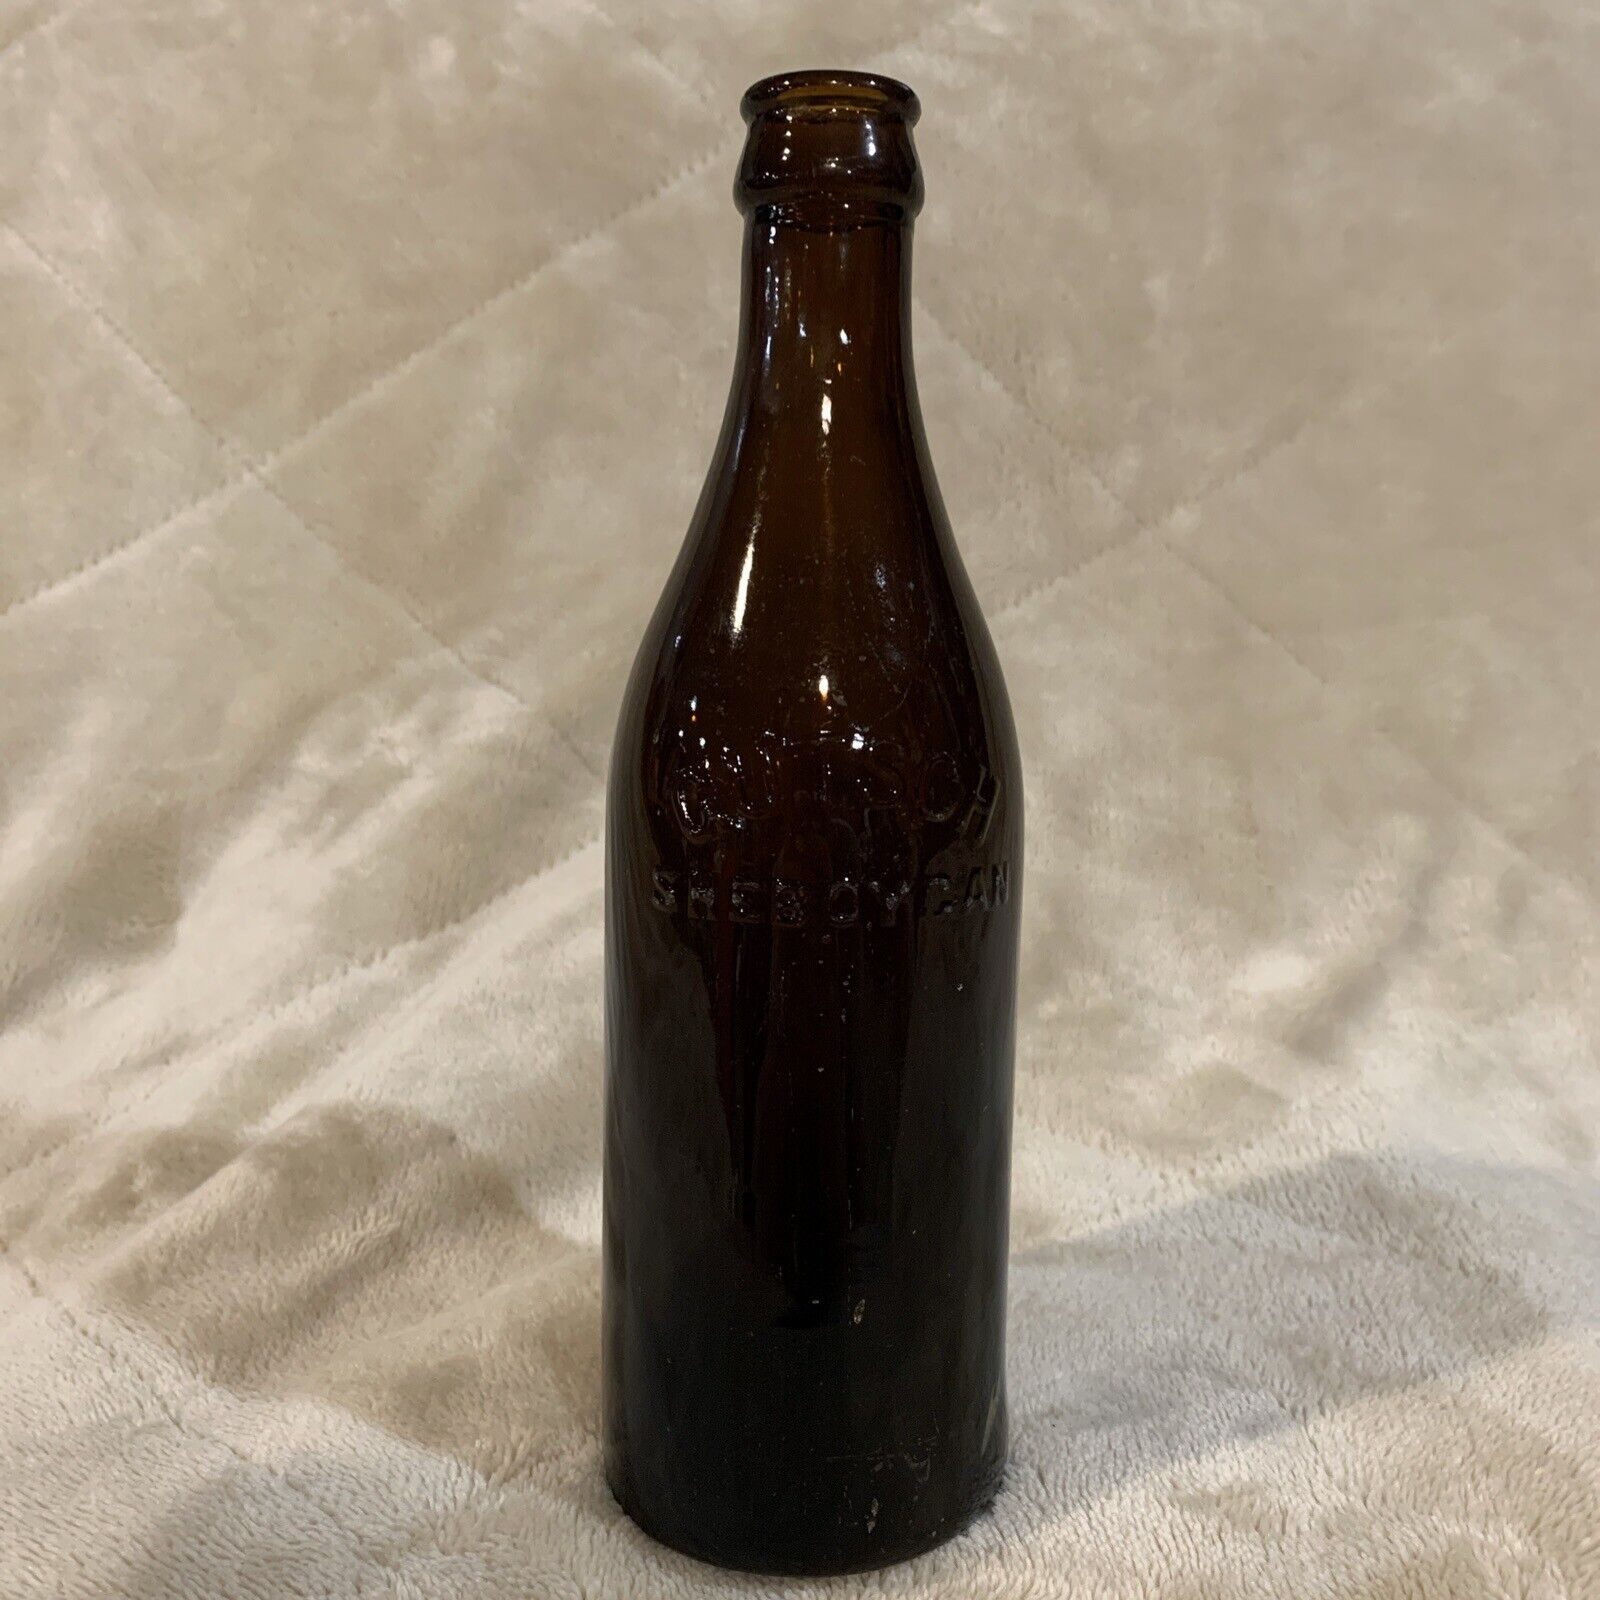 VTG Gutsch Brewing Co Amber Glass Beer Bottle Sheboygan Wisconsin Brewery No Cap